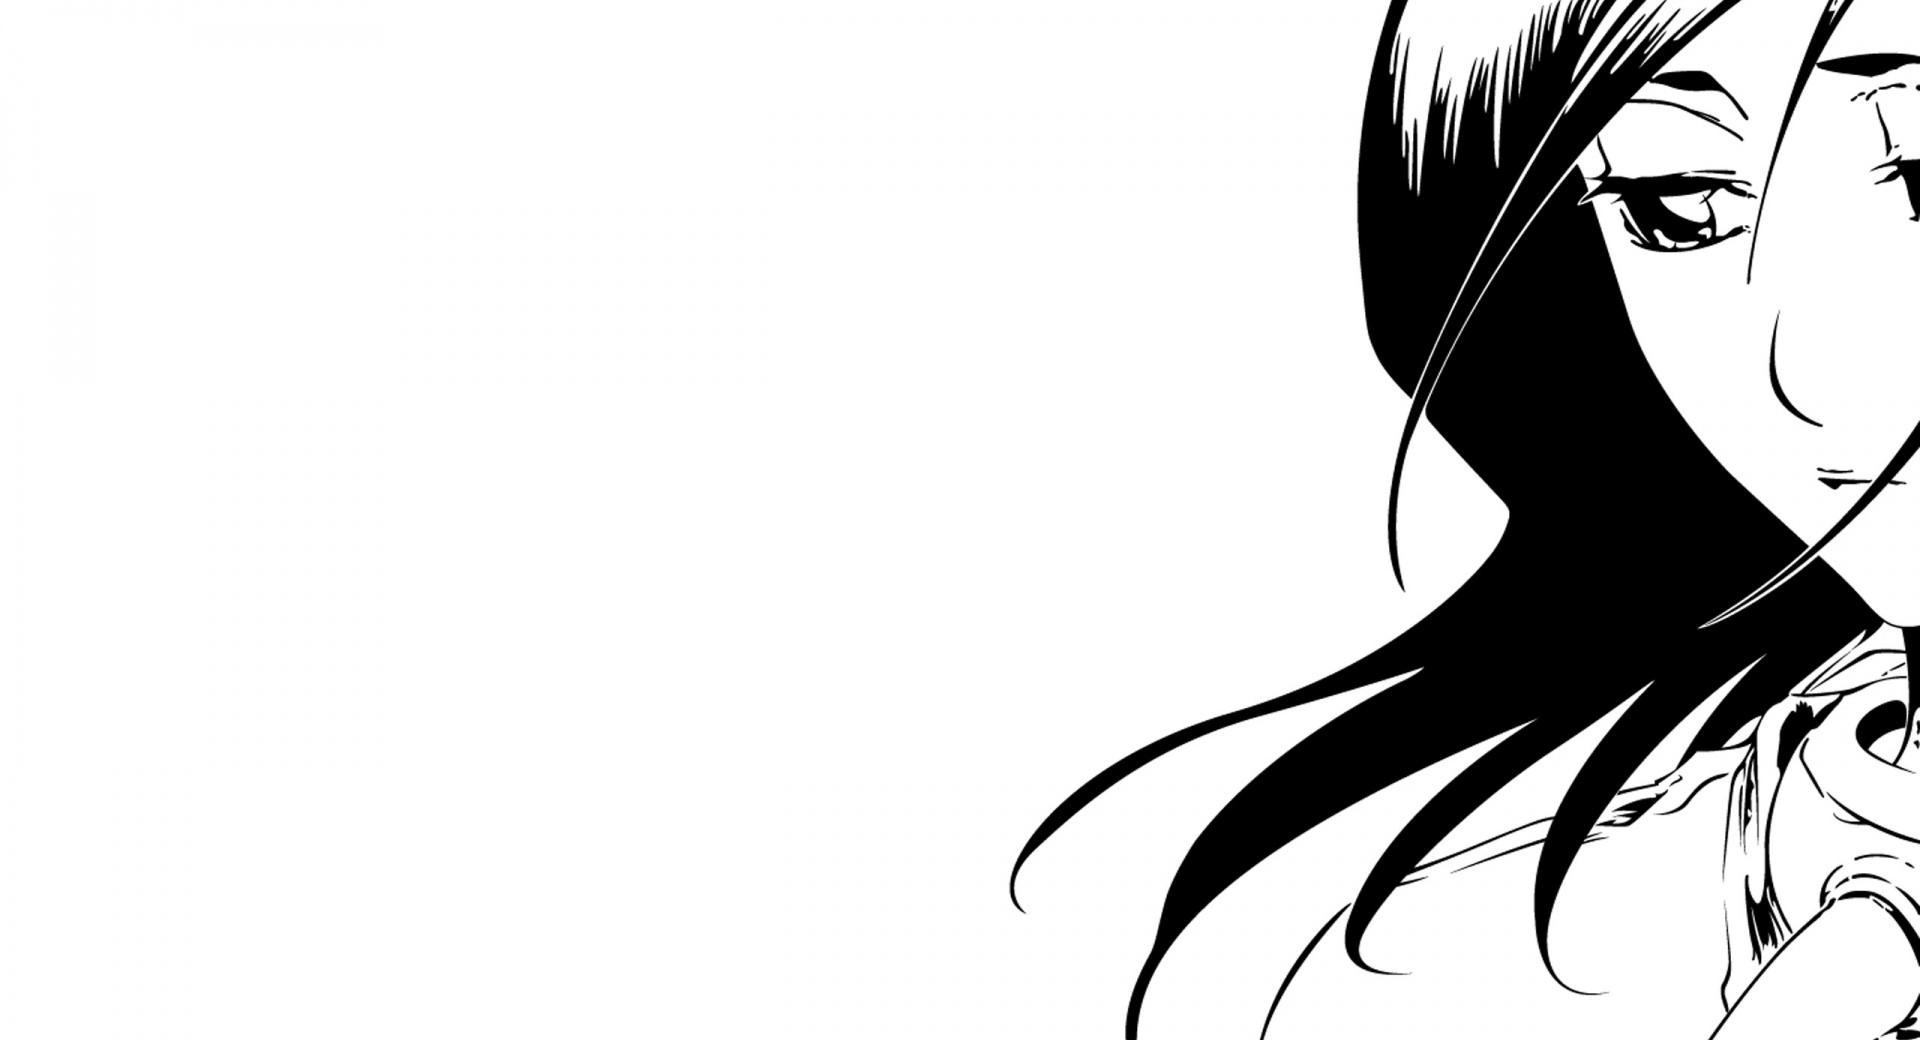 Melancholy Girl Manga at 1600 x 1200 size wallpapers HD quality